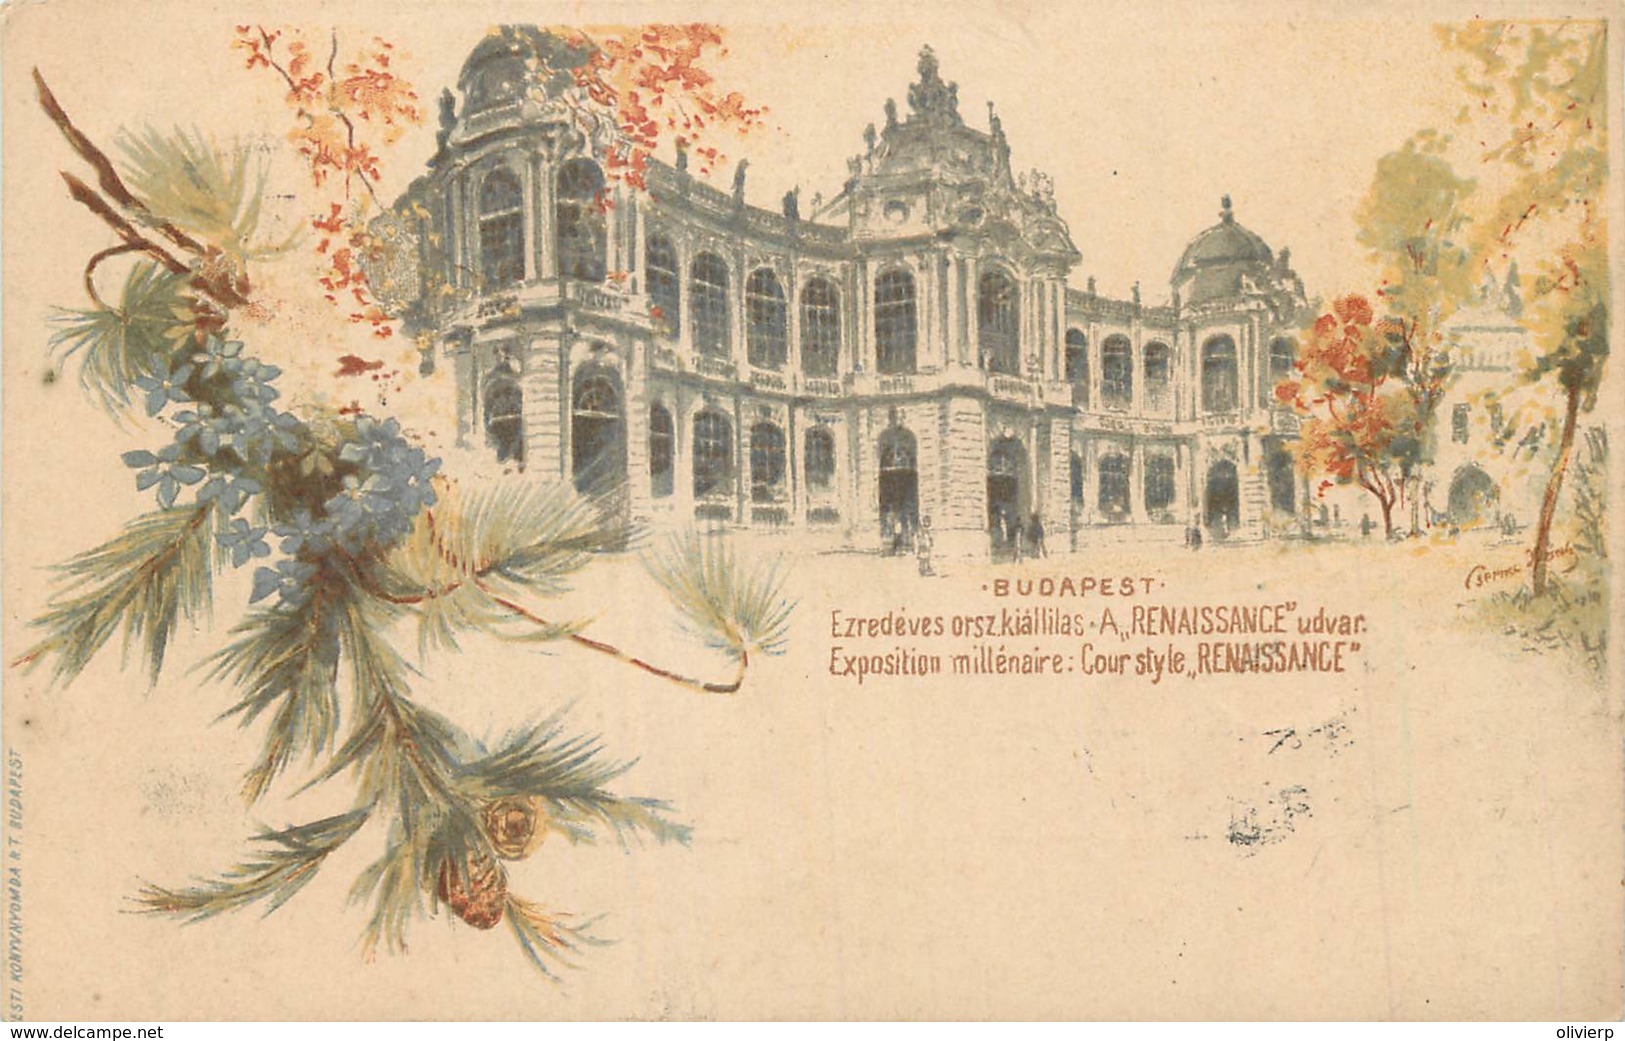 Hongrie - Type Gruss Aus - Budapest - Exposition Millénaire - Cour Style Renaissance - Hungary